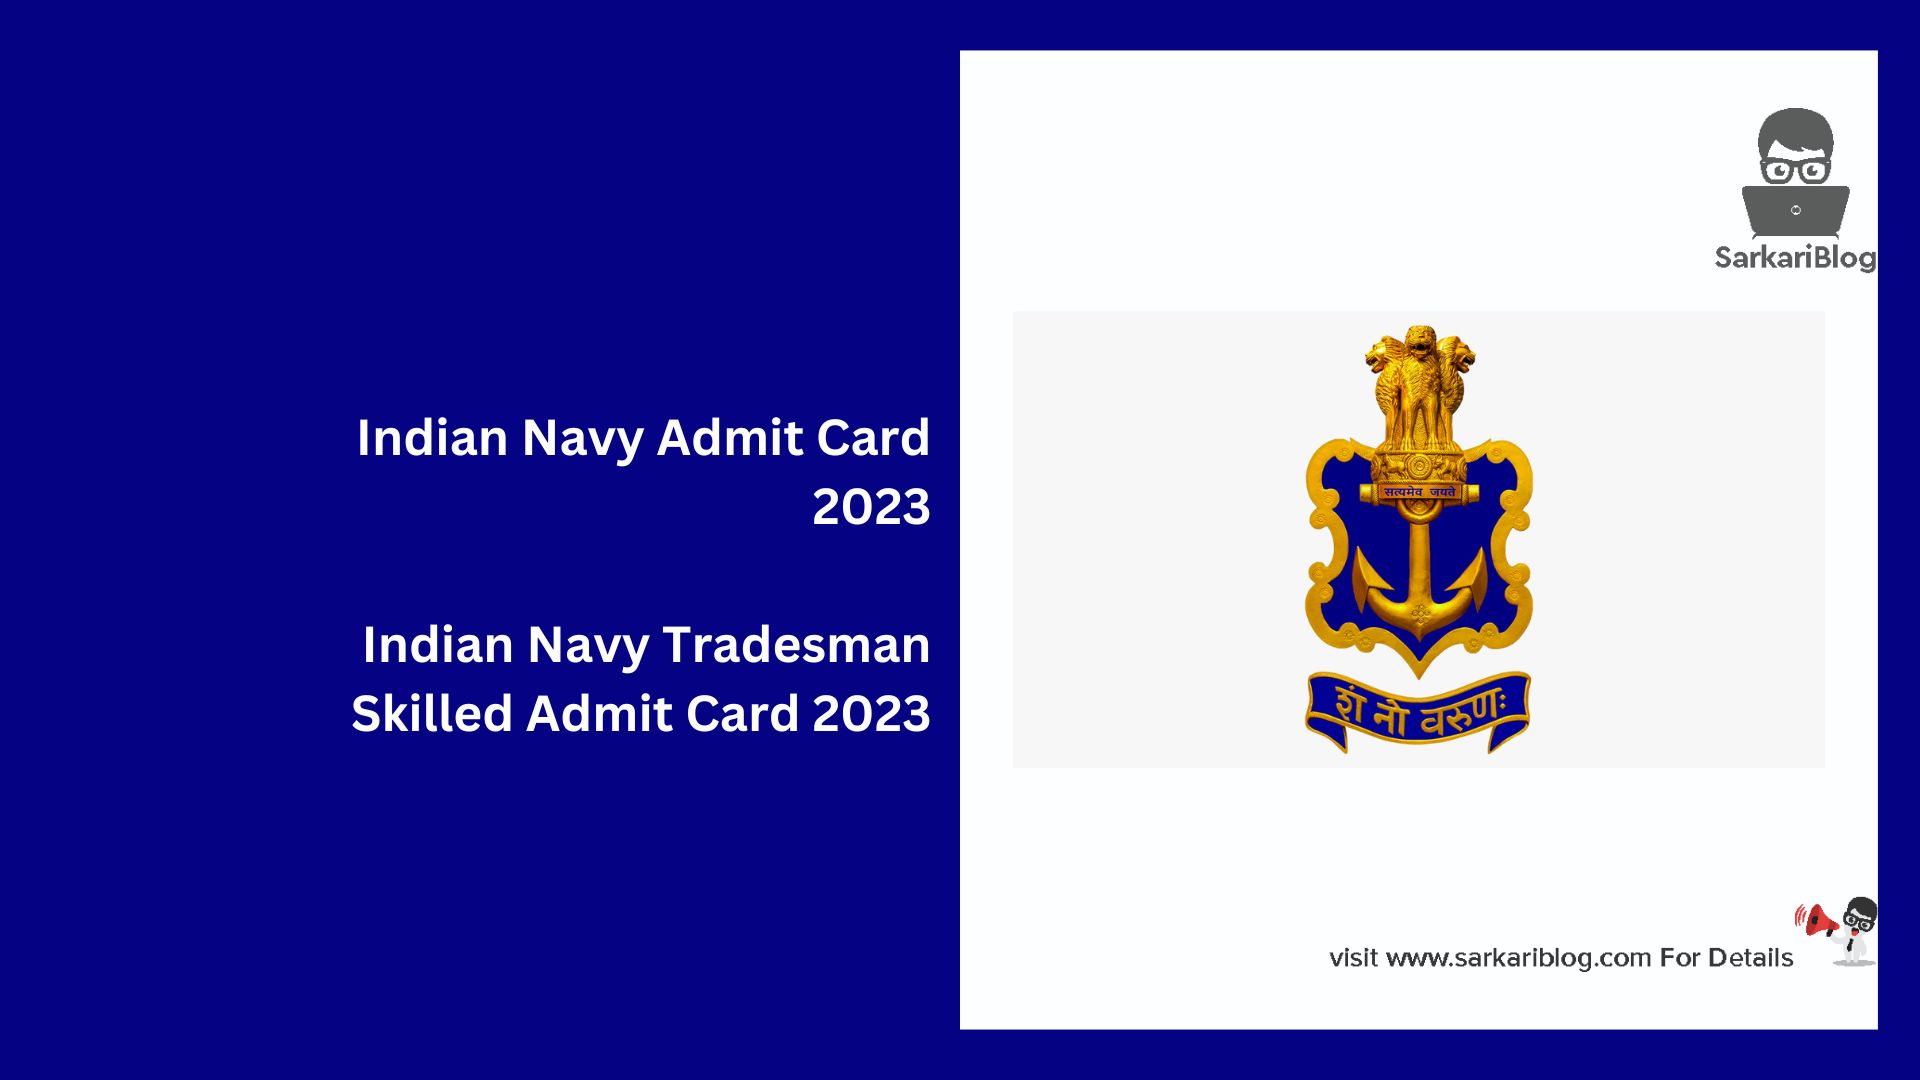 Indian Navy Admit Card 2023